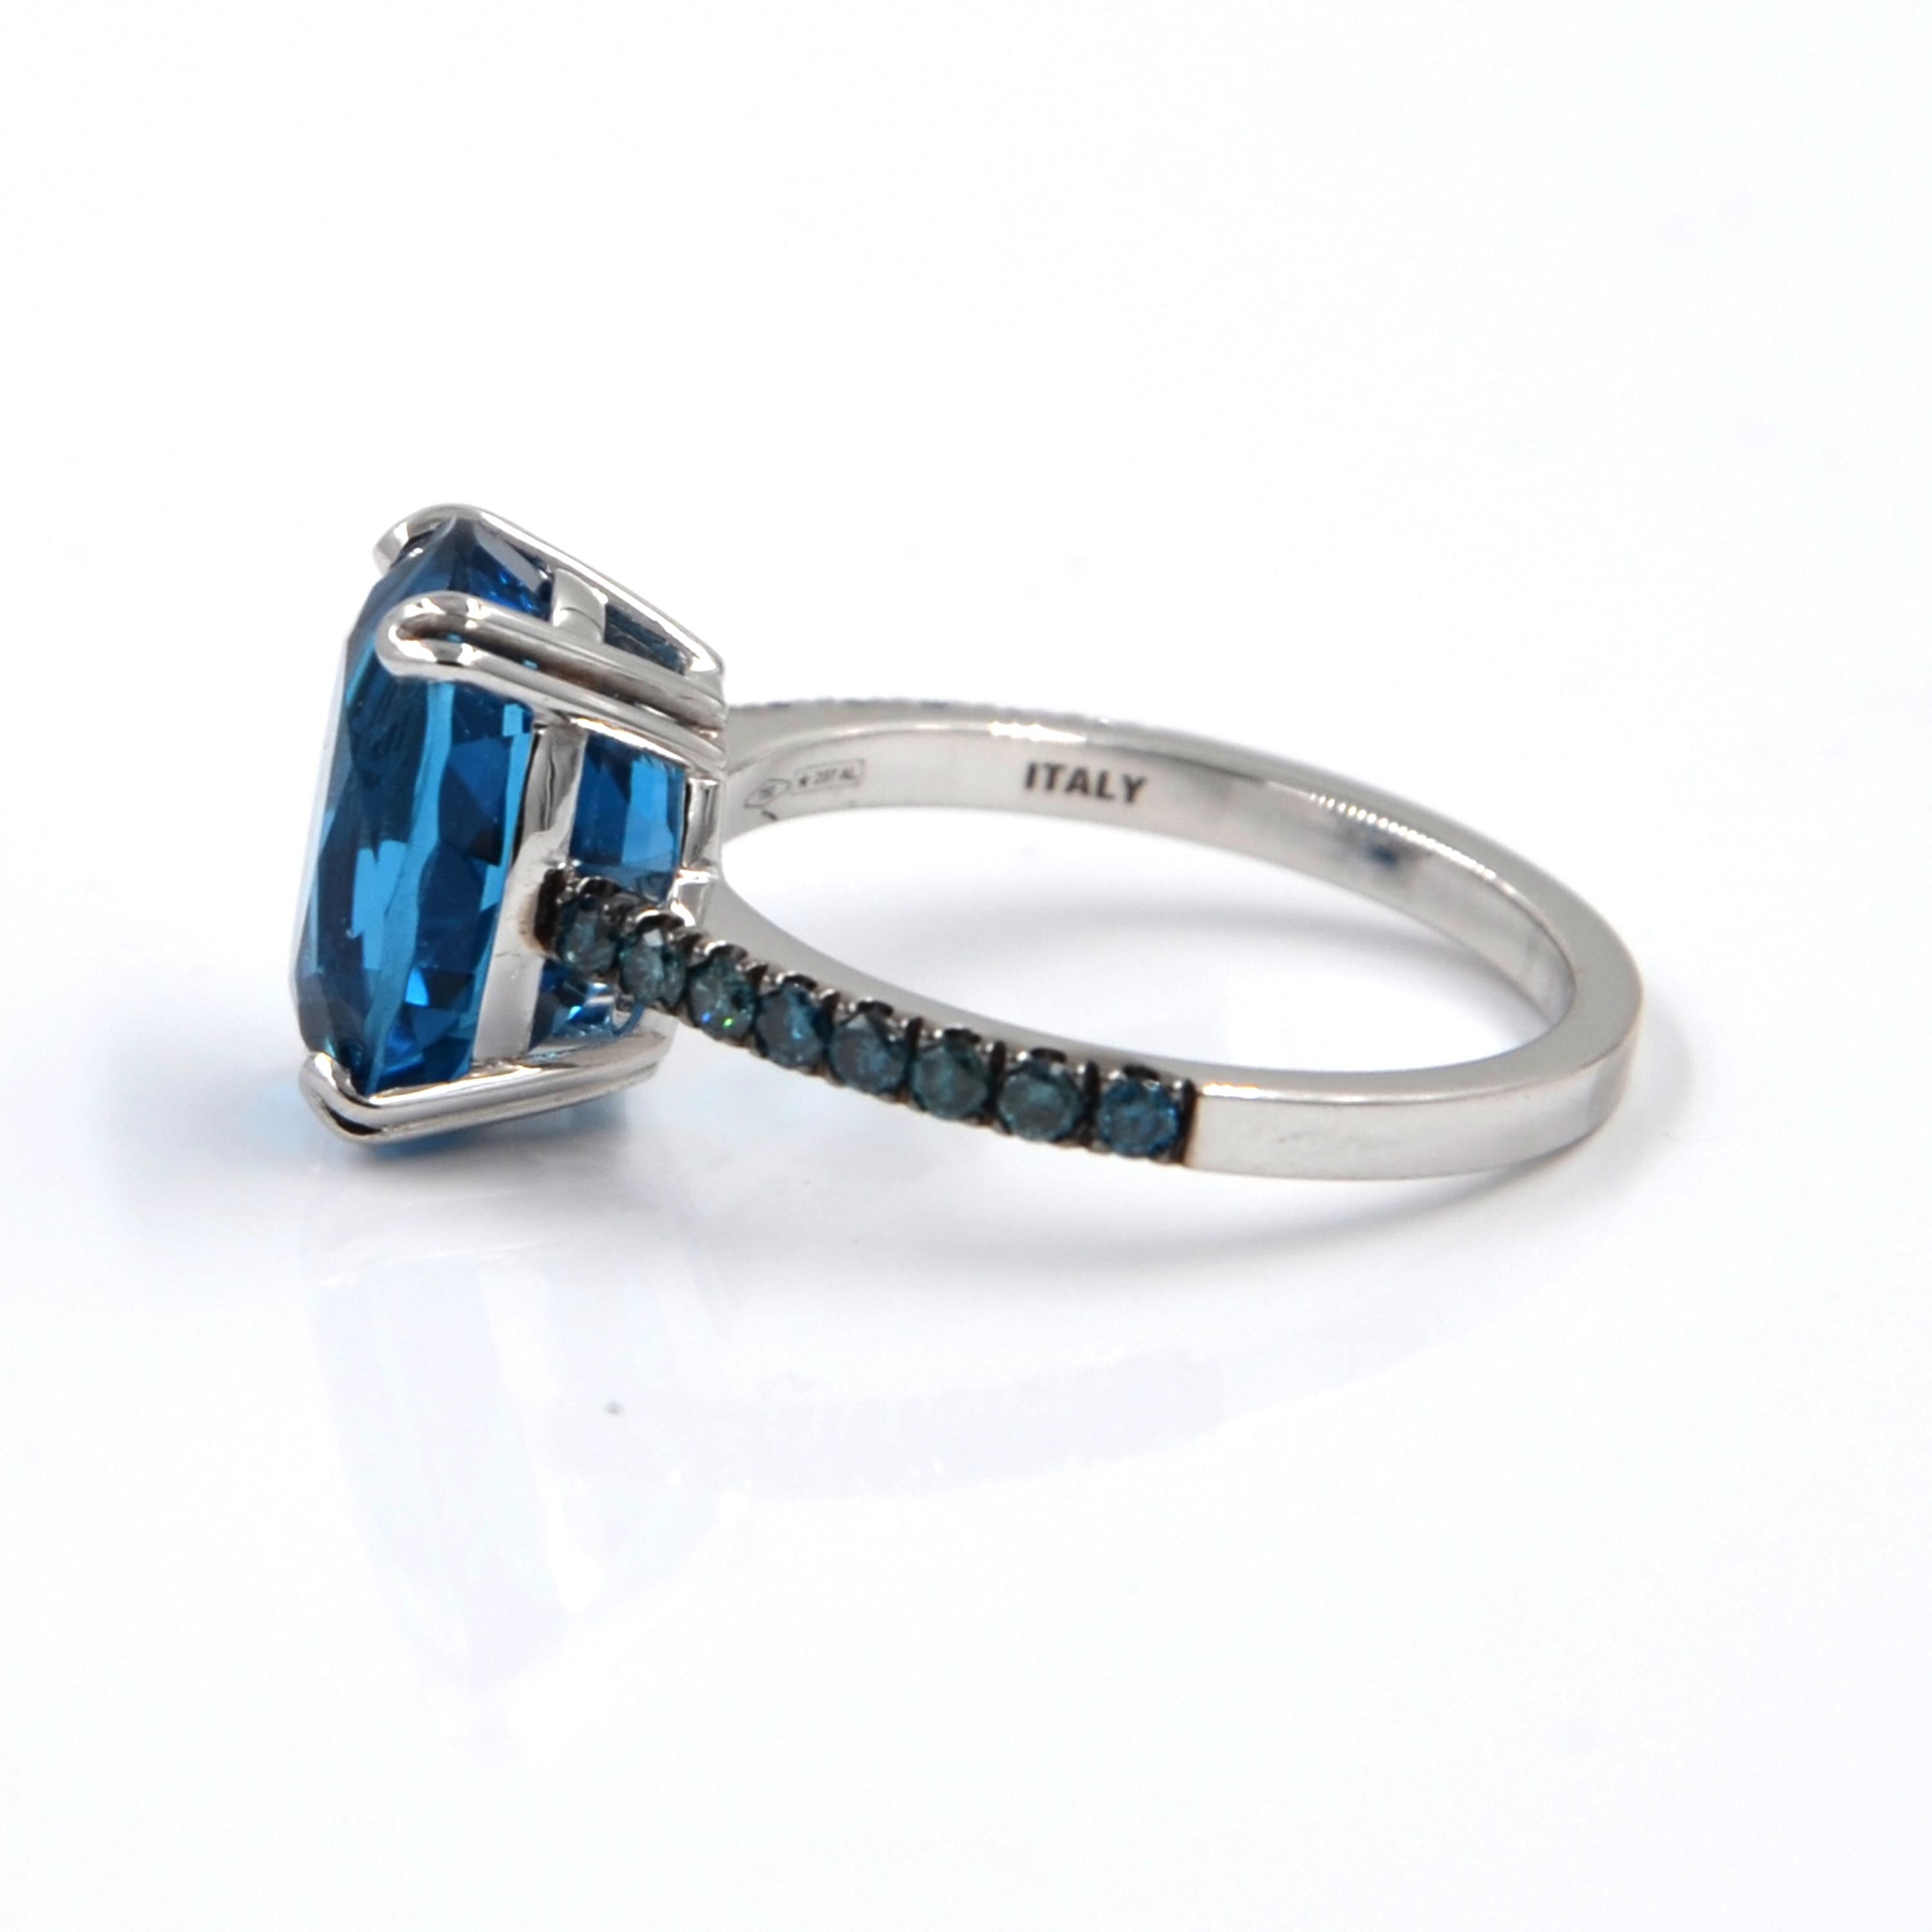 18KT White Gold  LONDON BLUE TOPAZ AND BLUE DIAMONDS GARAVELLI RING 
Ovale shape blue topaz mm 12x9 ct : 6,22
GOLD gr : 3,20
Blue DIAMONDS ct : 0,33 
ring size 55